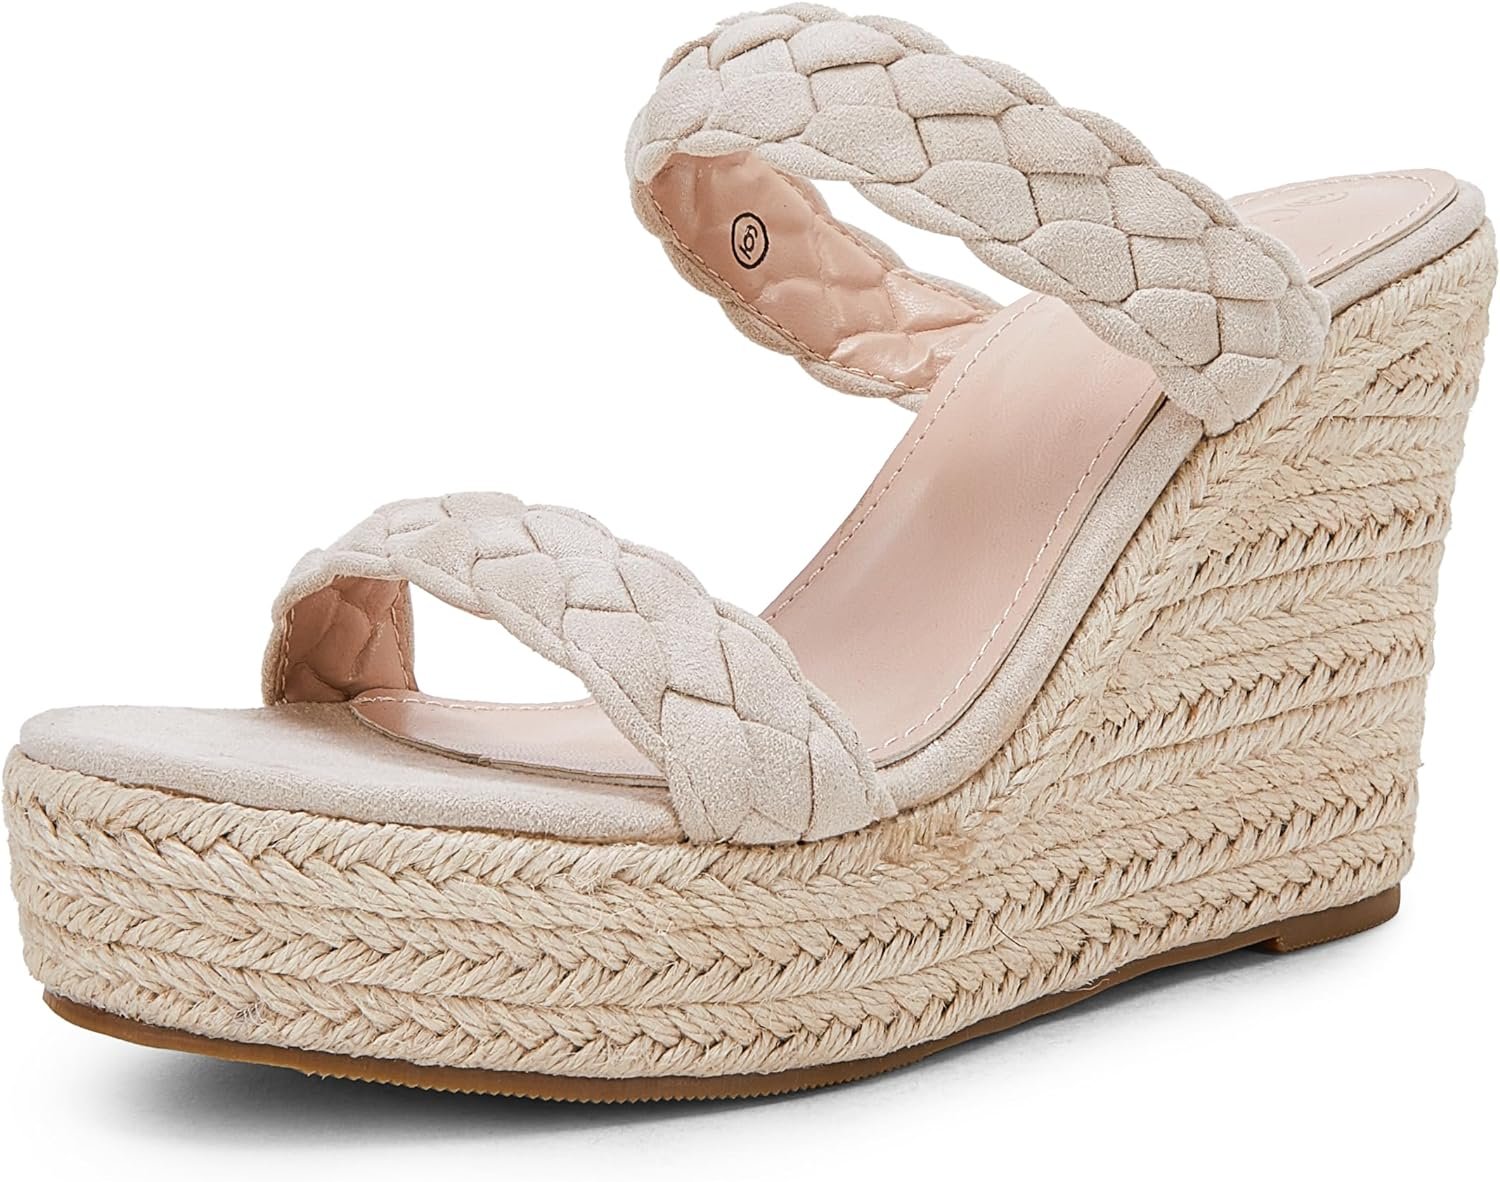 Coutgo Womens Wedge Platform Sandals Espadrilles Two Strap Woven Slip On Summer Cute Slide Sandals